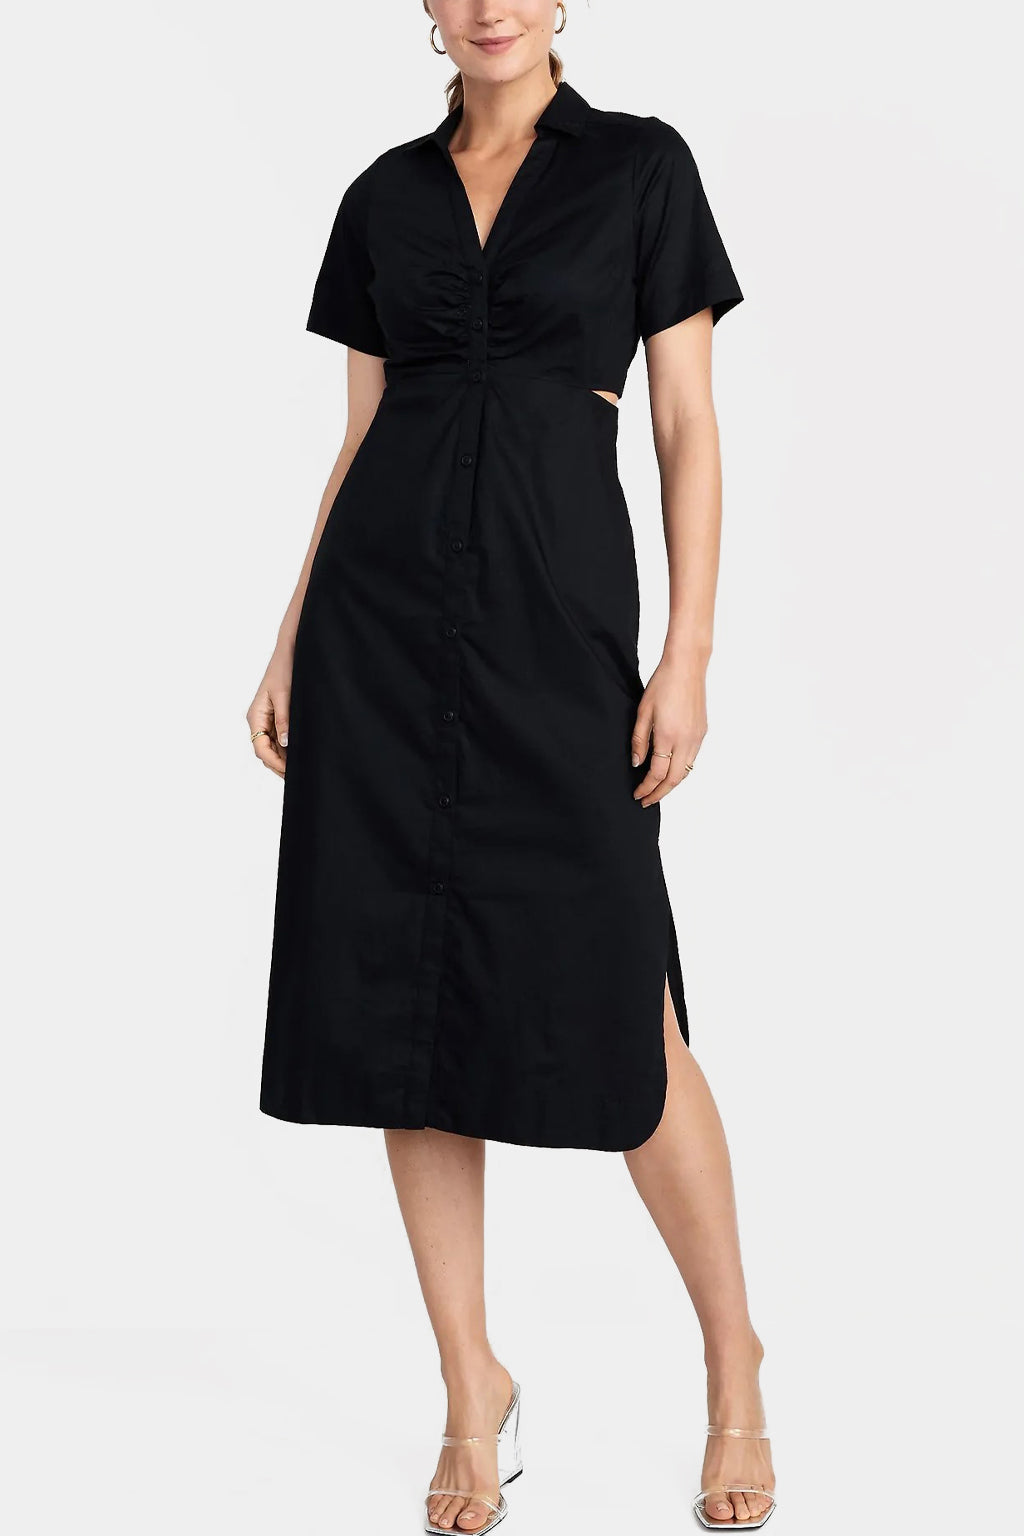 Old Navy - Cutout Midi Shirt Dress for Women